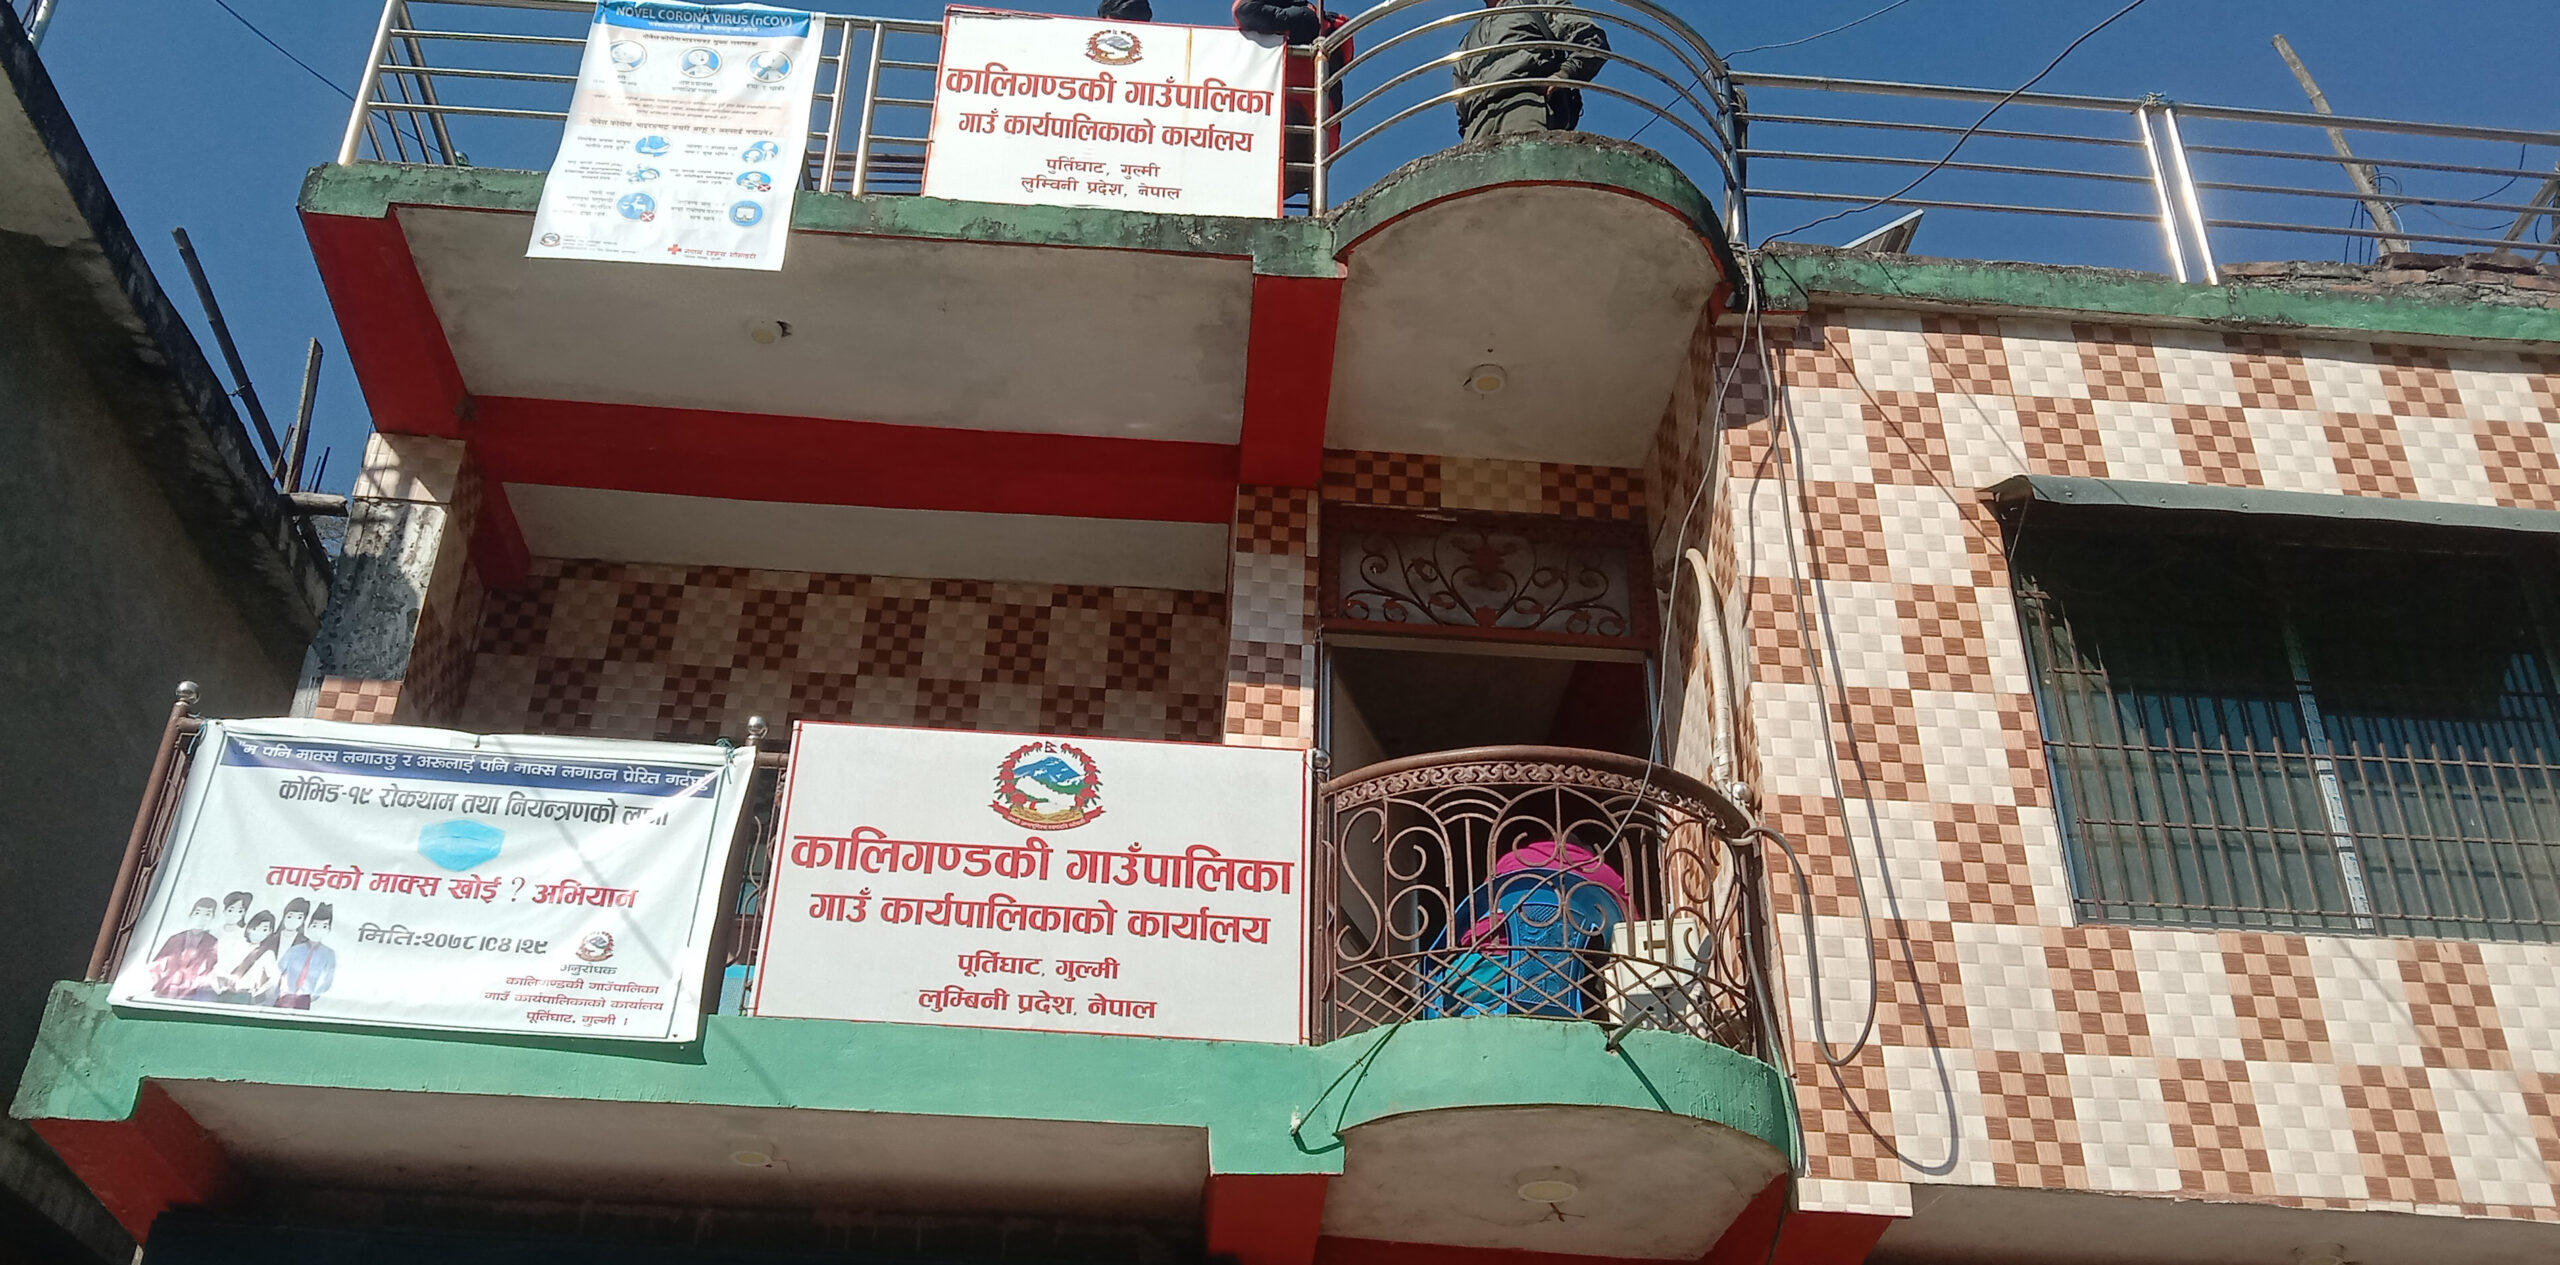 Kali Gandaki promoting banana varieties for self-employment